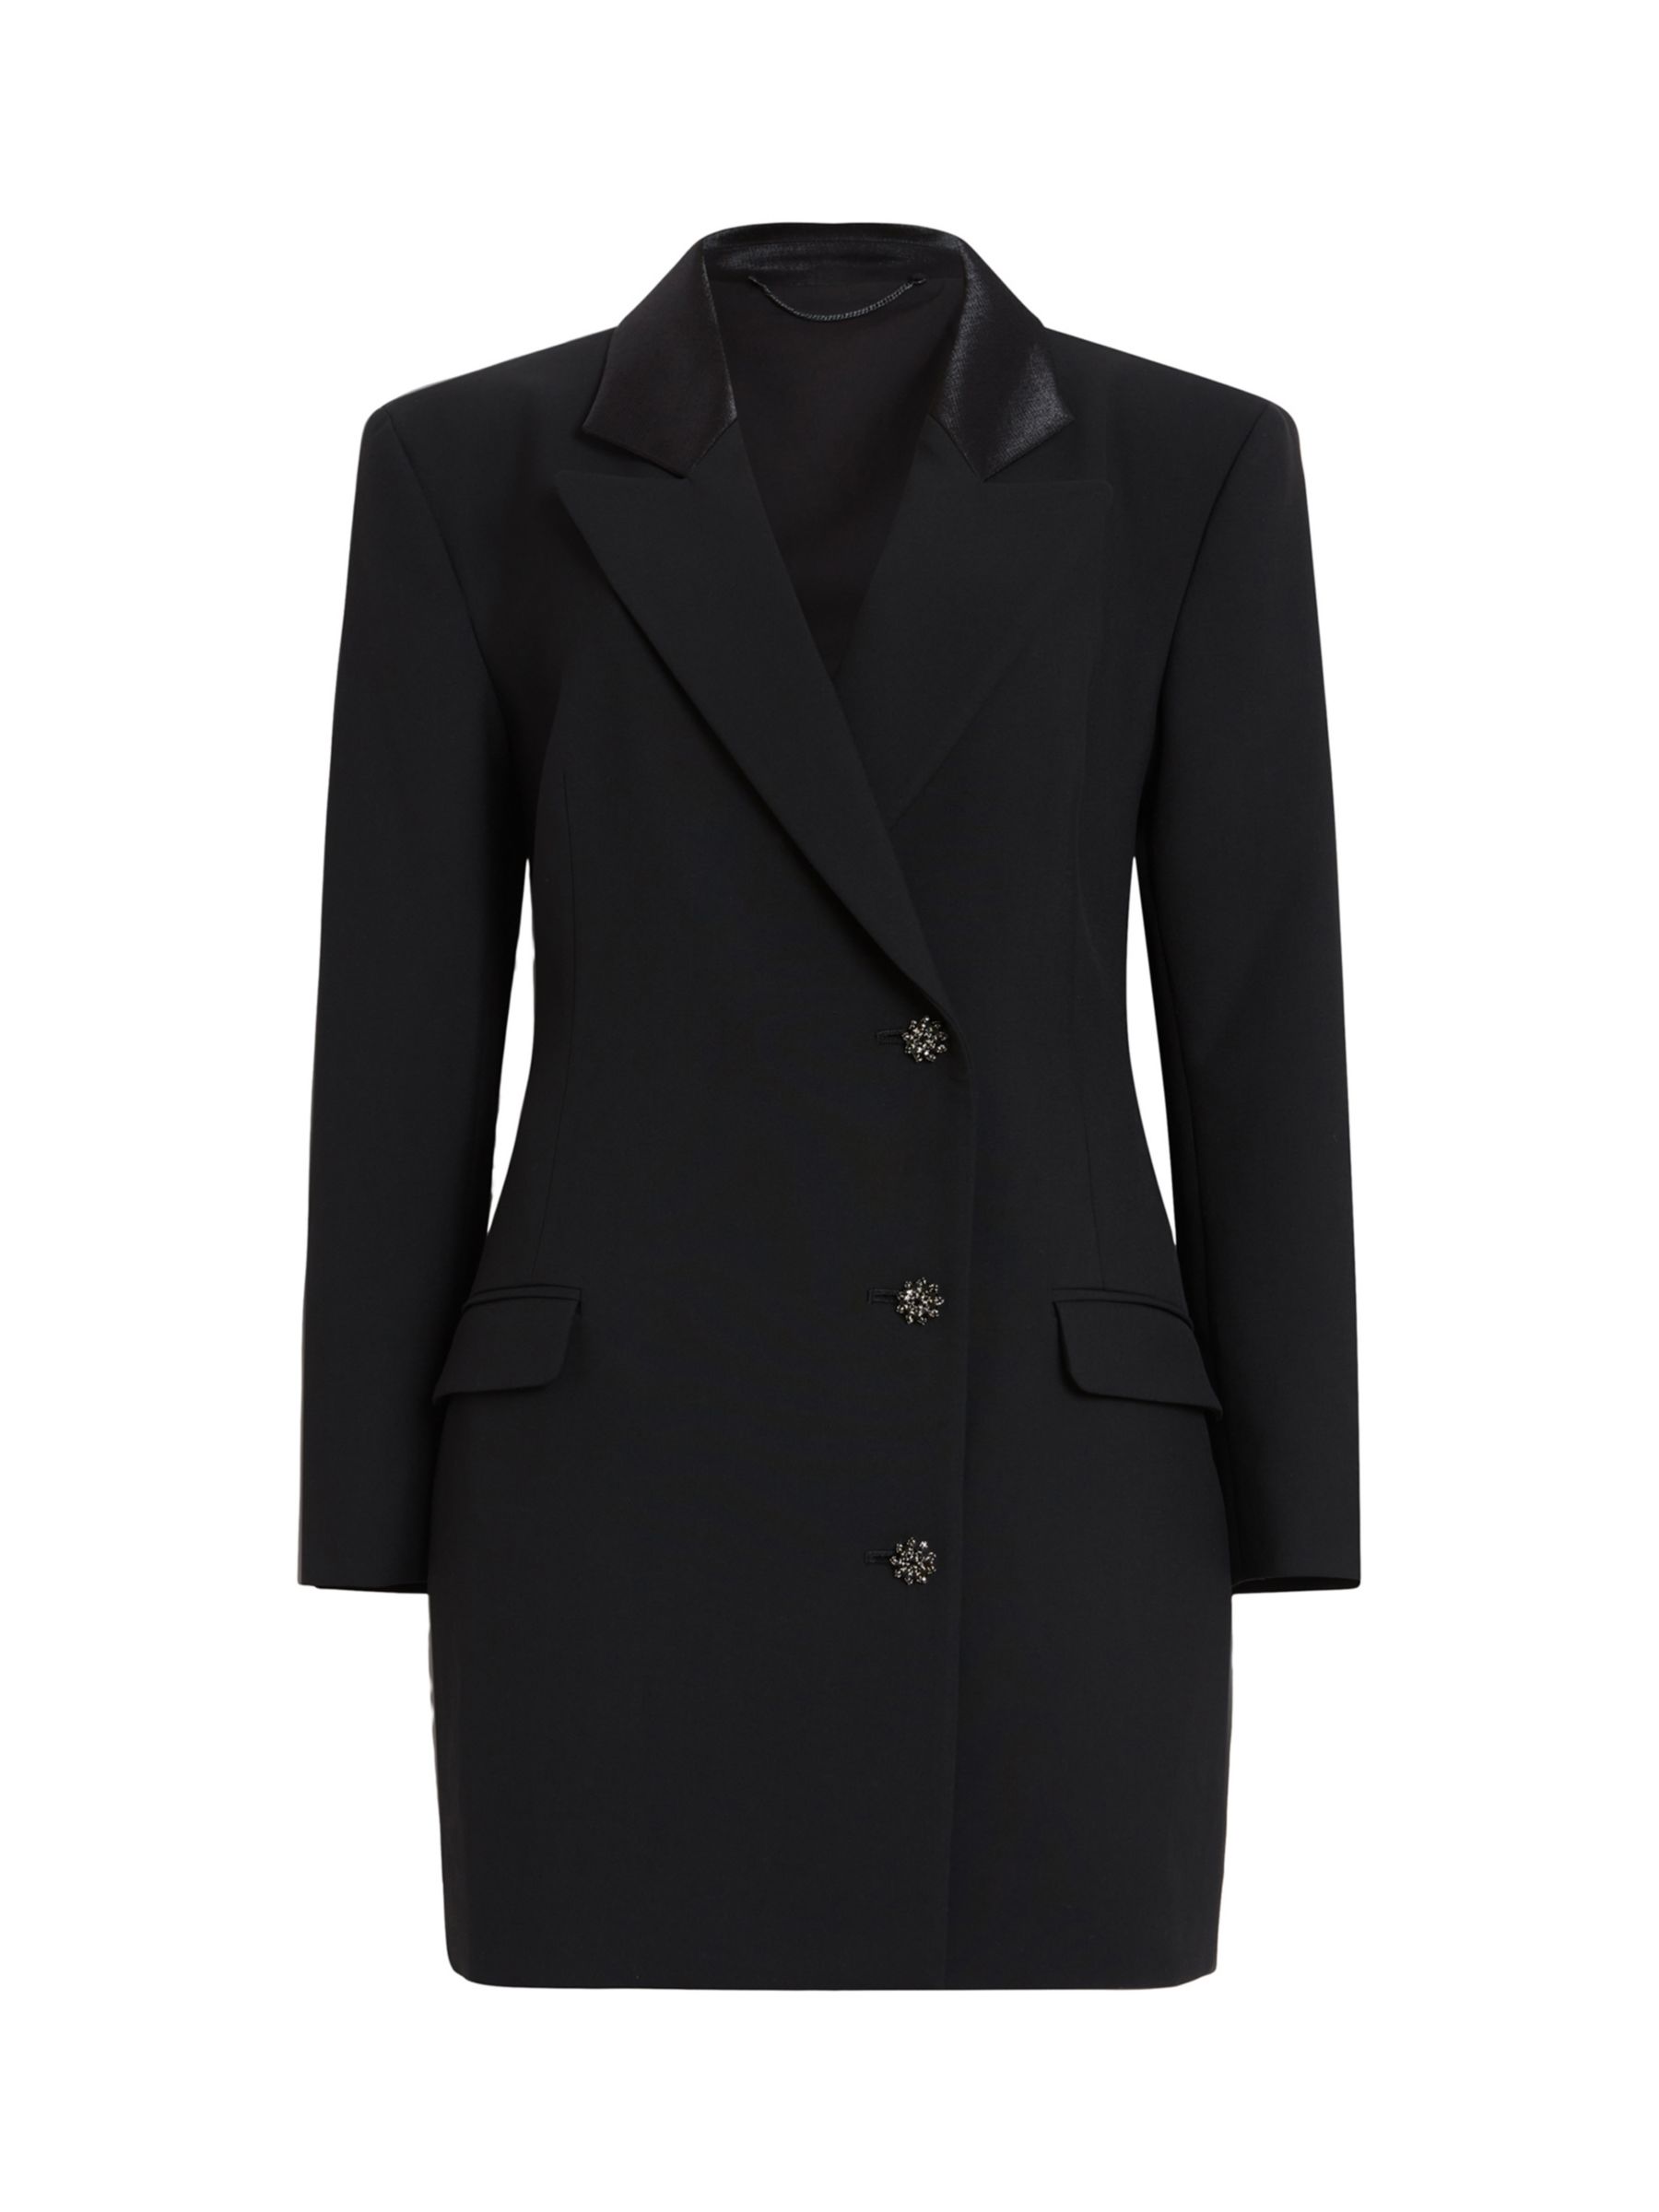 AllSaints Erykah Jewel Button Blazer Mini Dress, Black at John Lewis ...